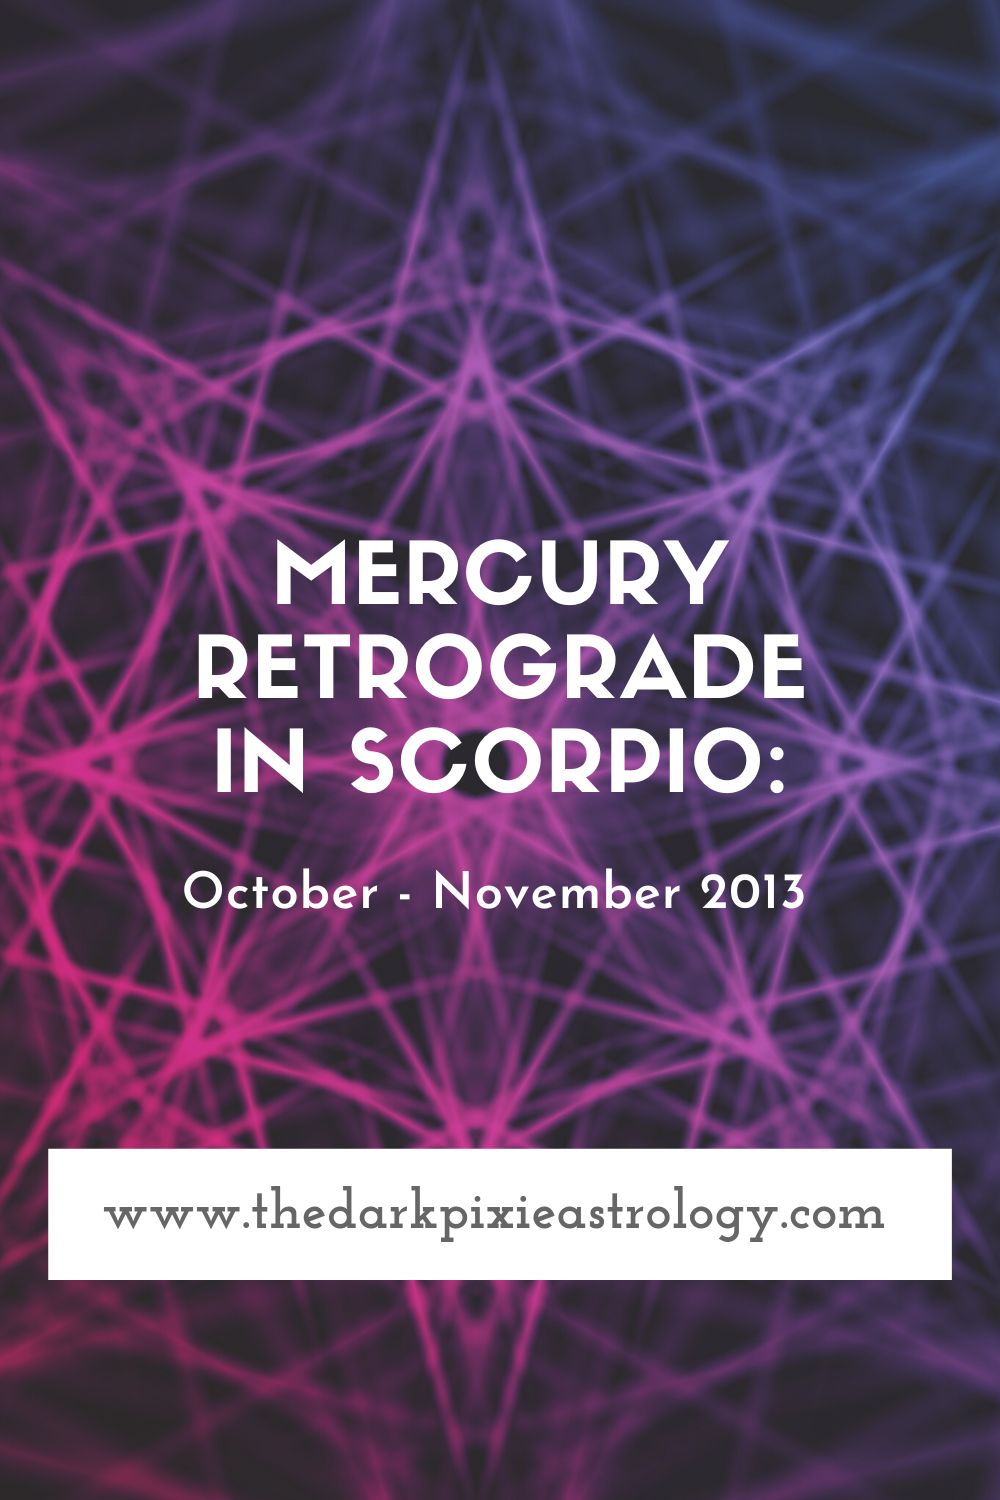 Mercury Retrograde in Scorpio: October - November 2013 - The Dark Pixie Astrology